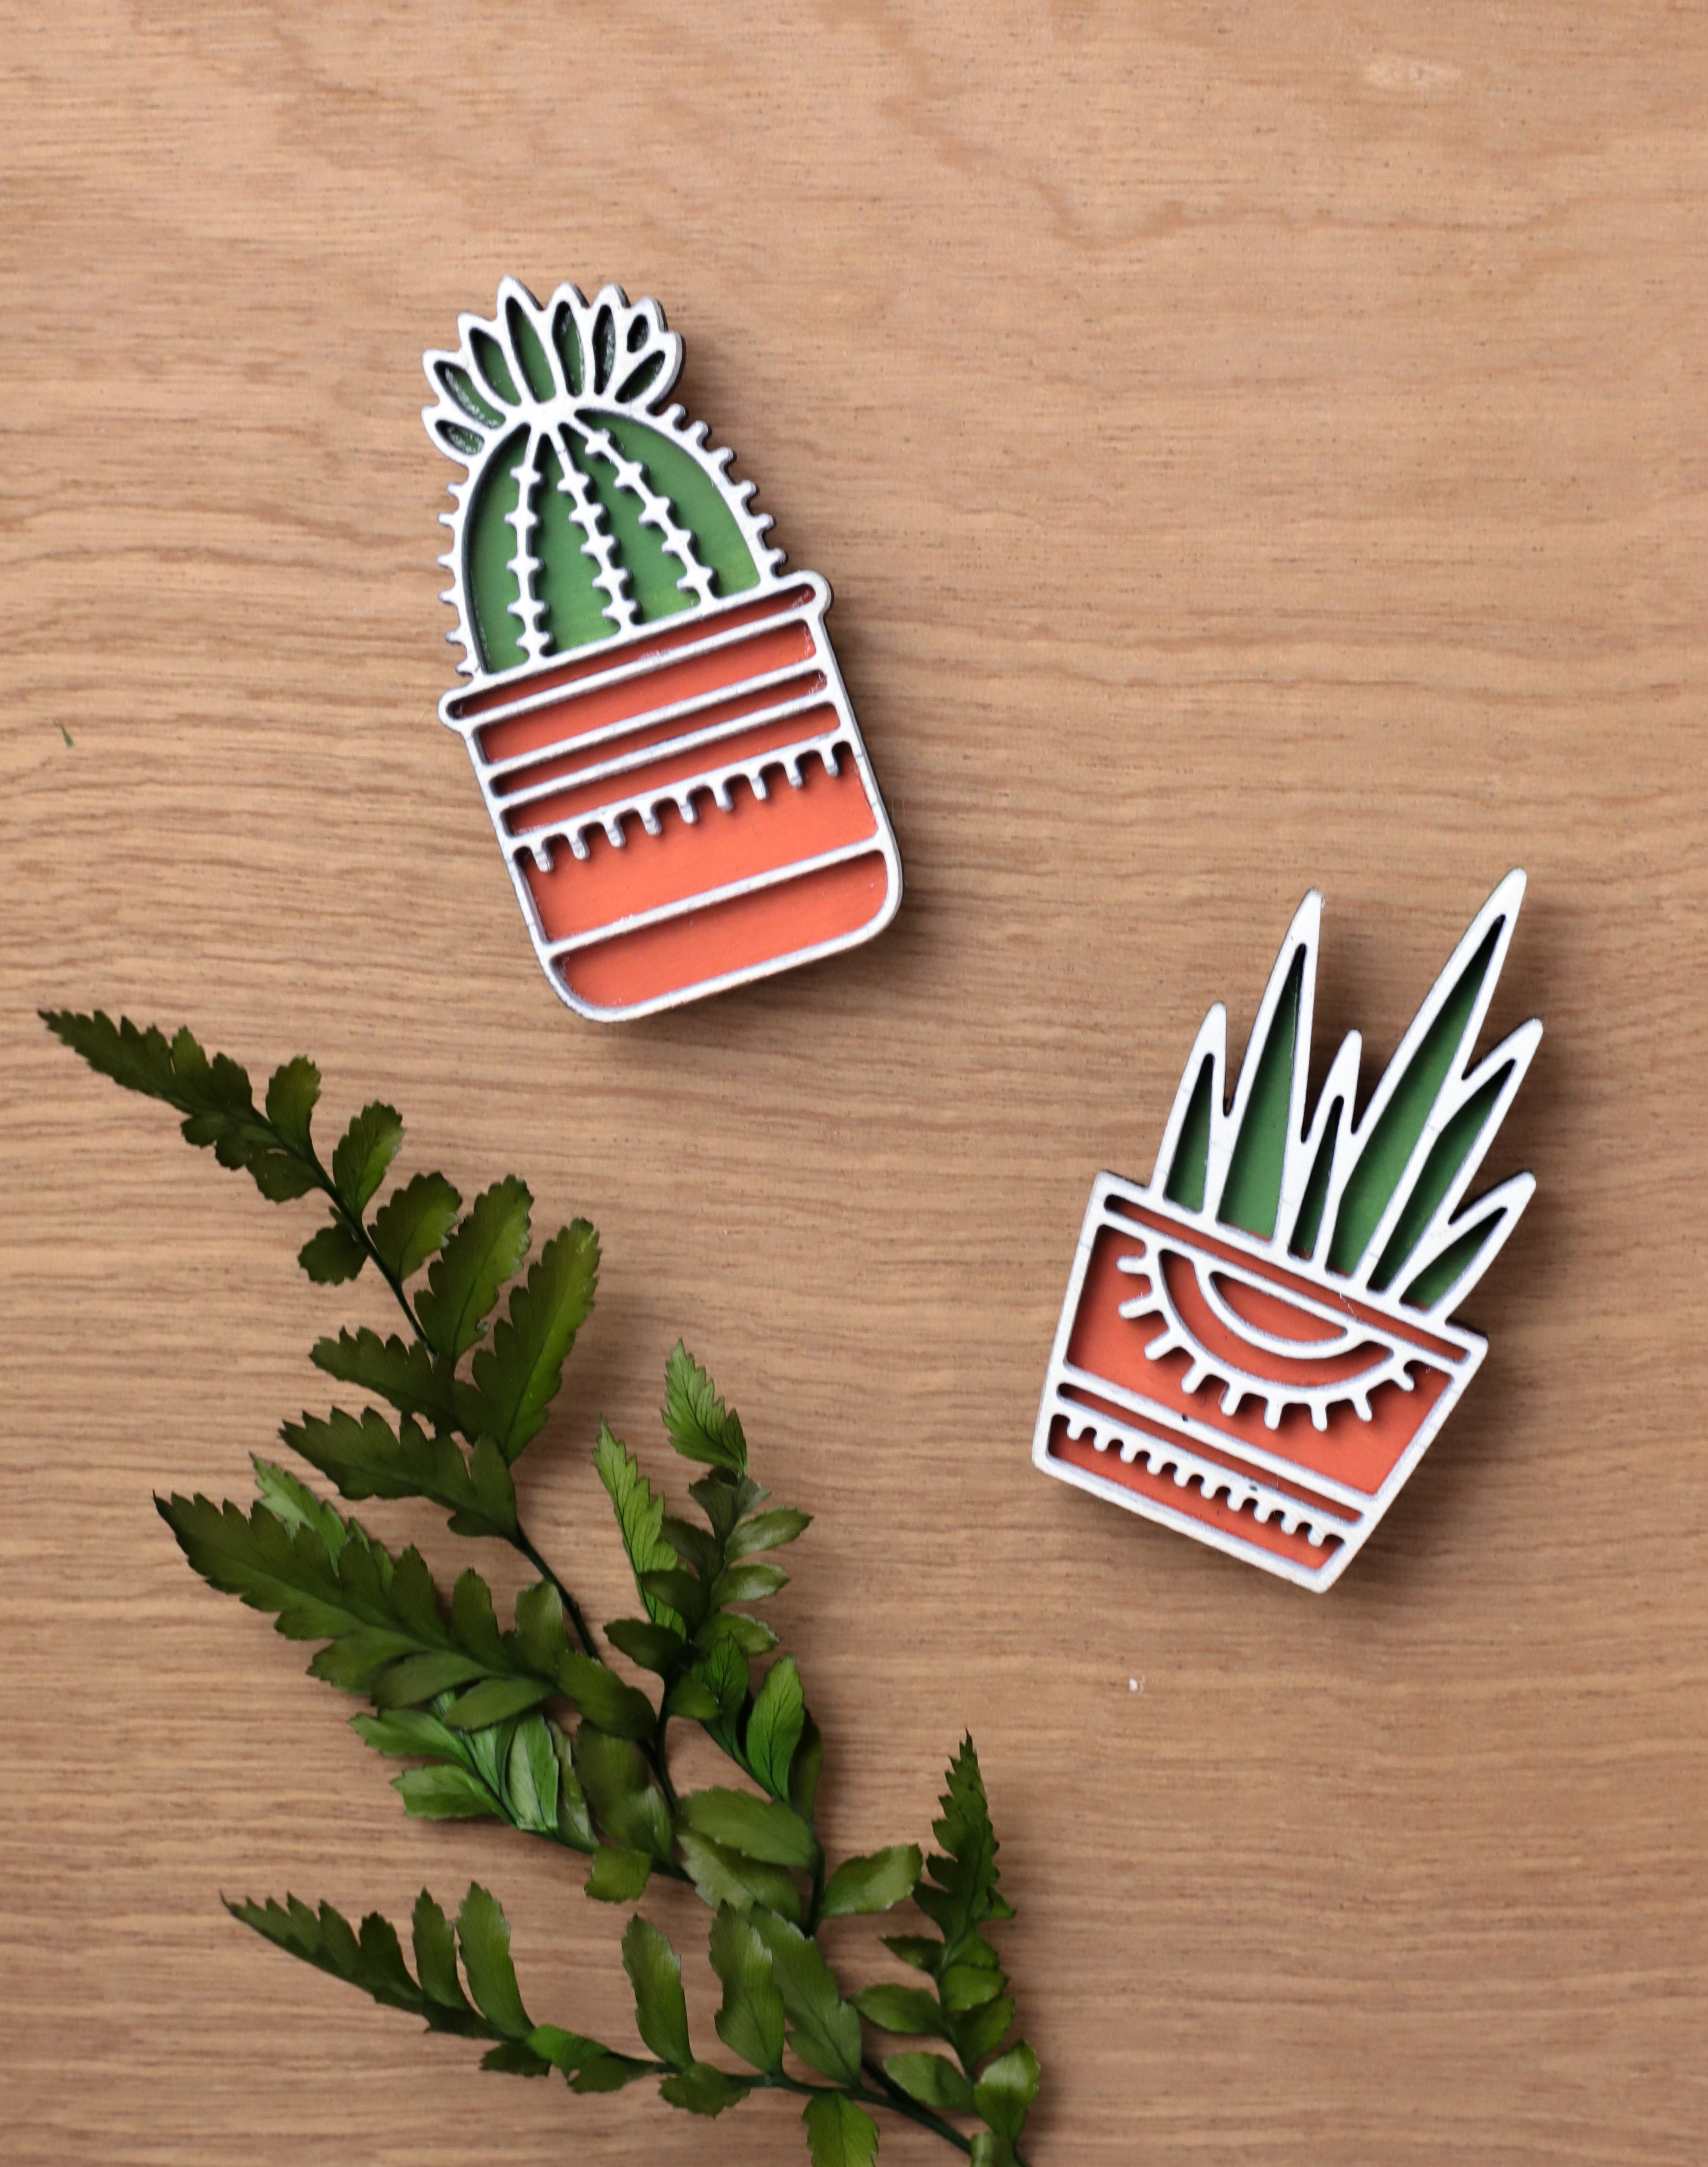 Plantastic Succulent Kitchen Magnets (Set of 2)